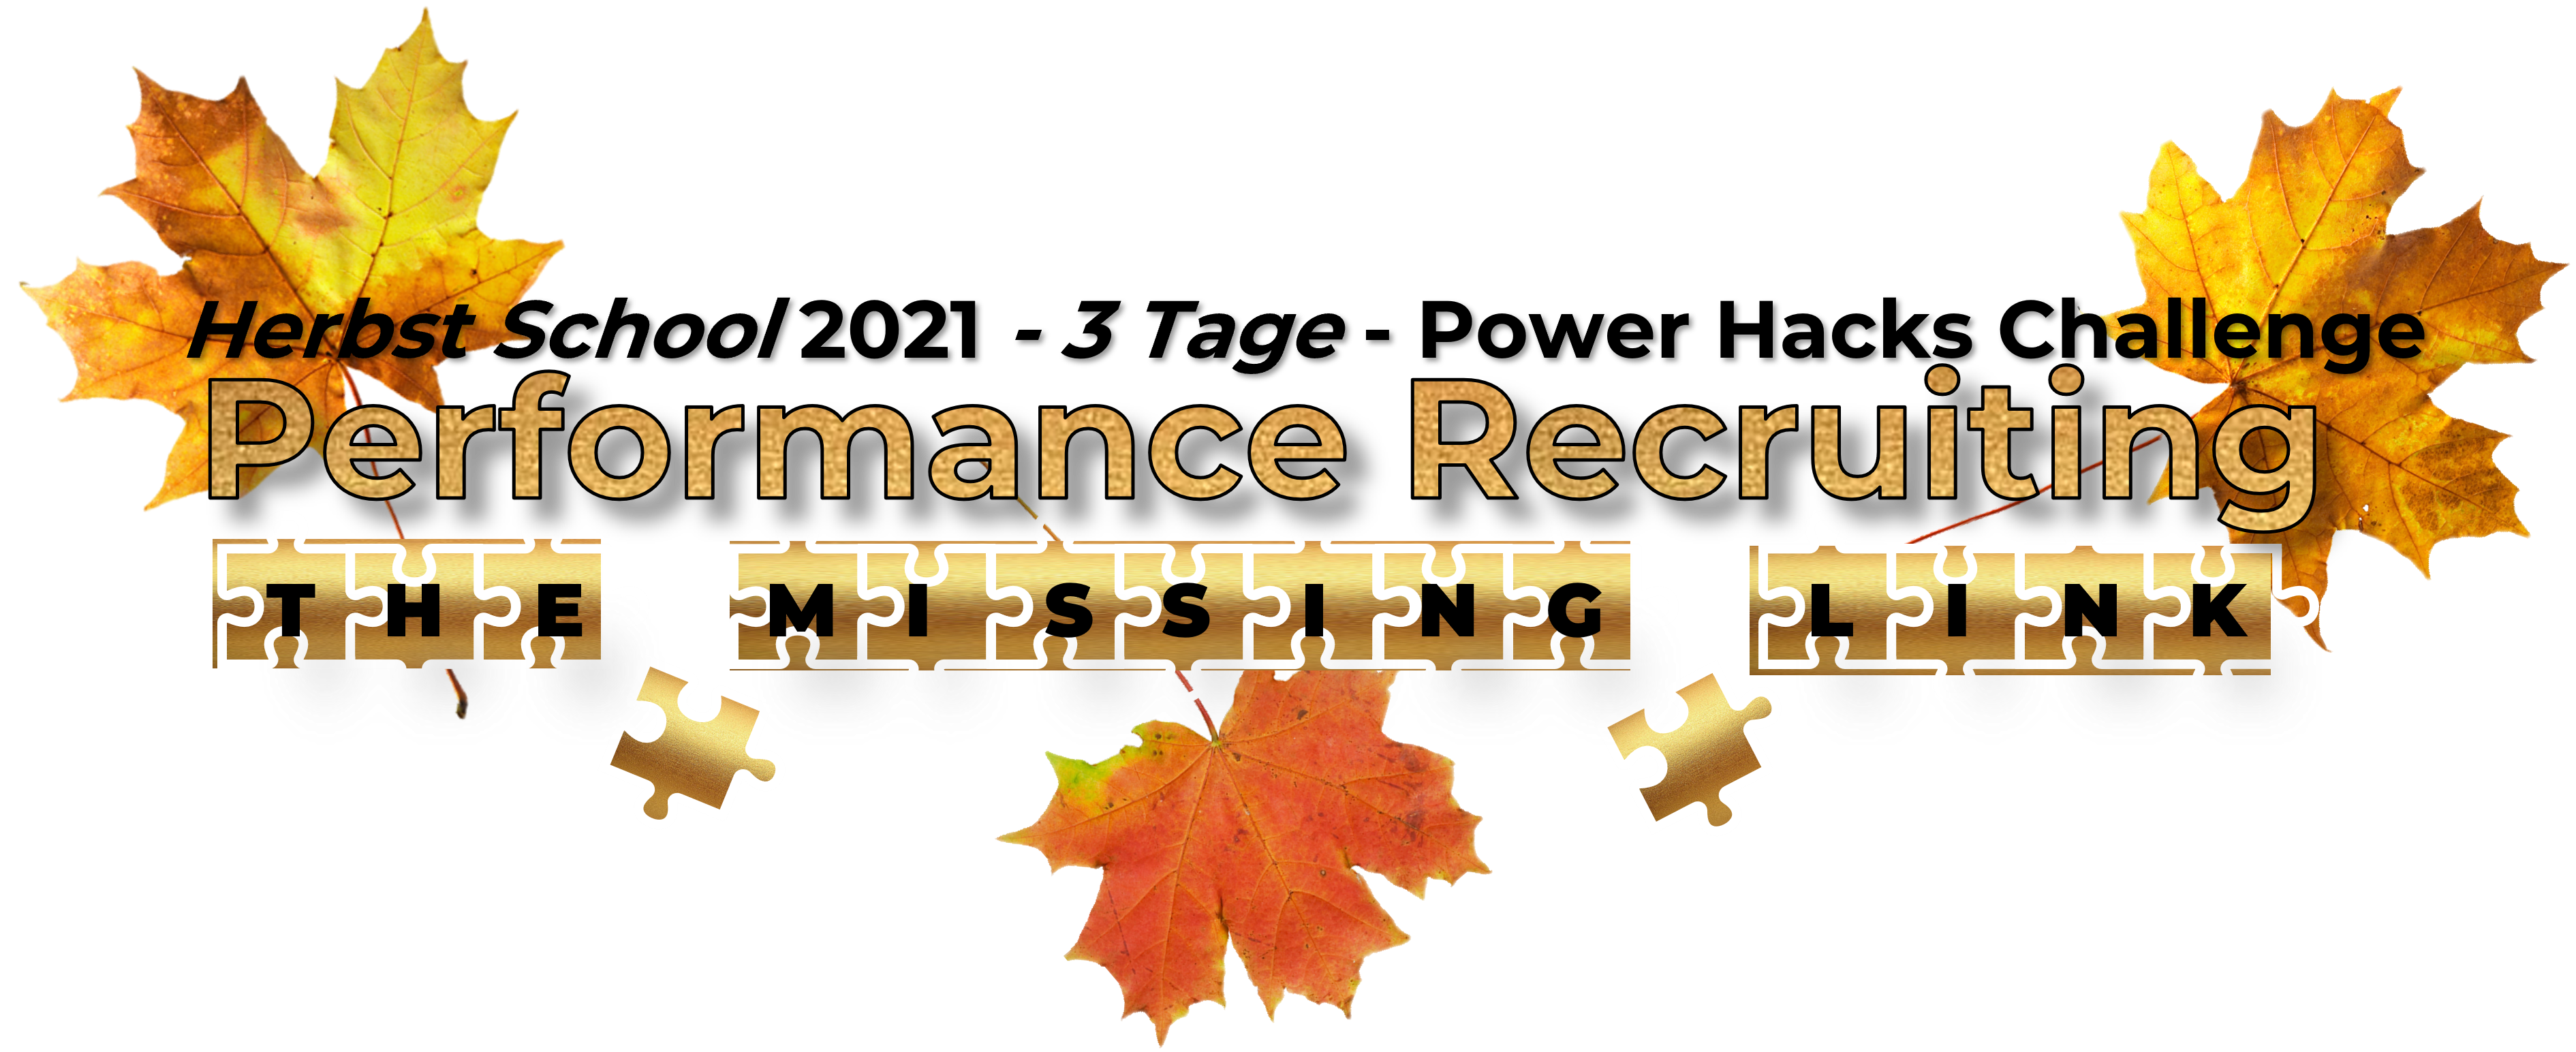 Herbst School 2021 - Performance Recruiting - transparent- schwarz